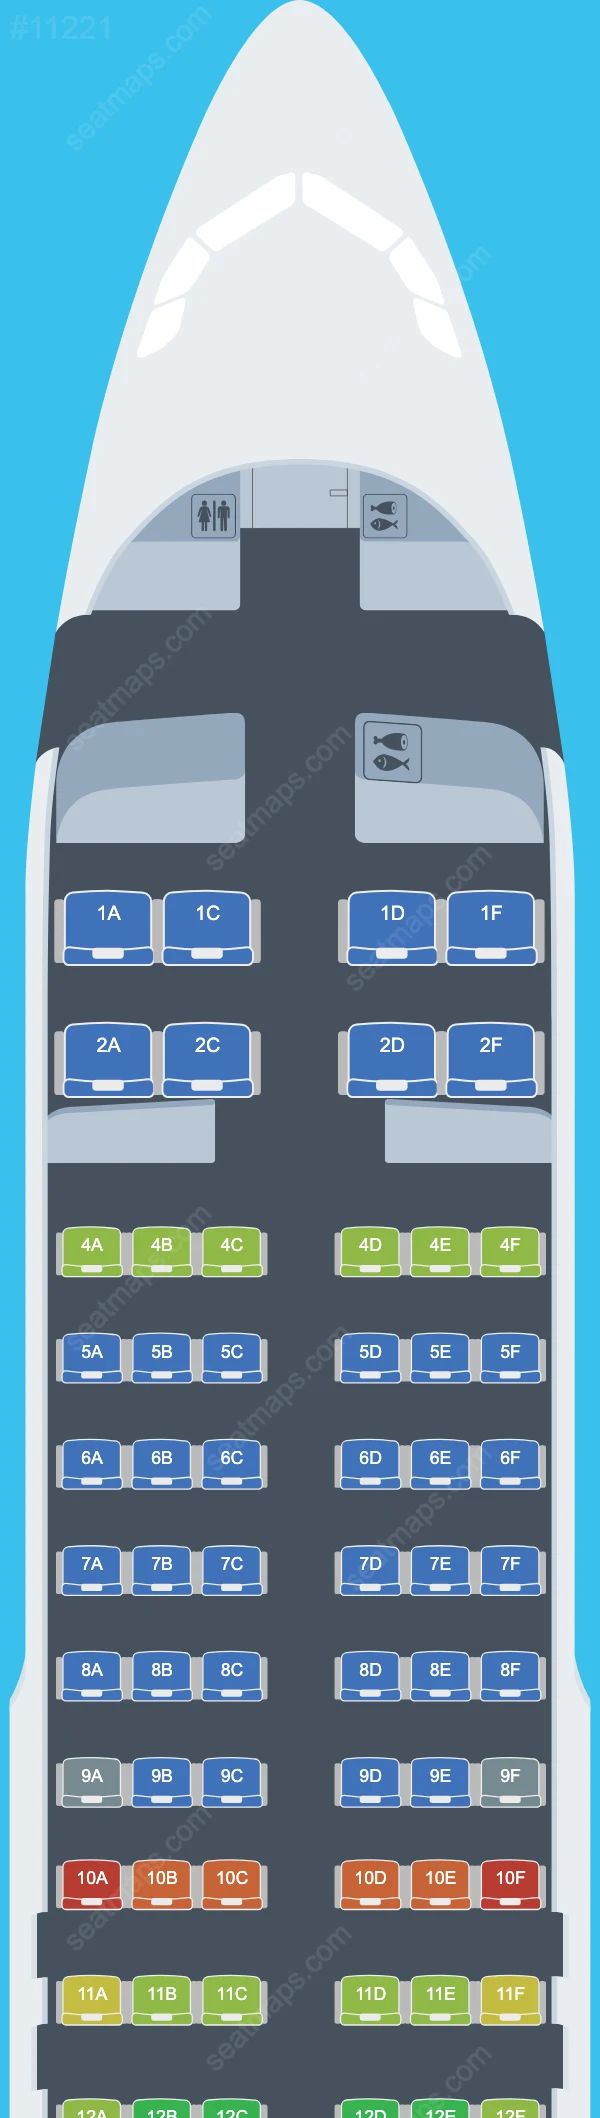 Batik Air Airbus A320-200 V.2 seatmap preview